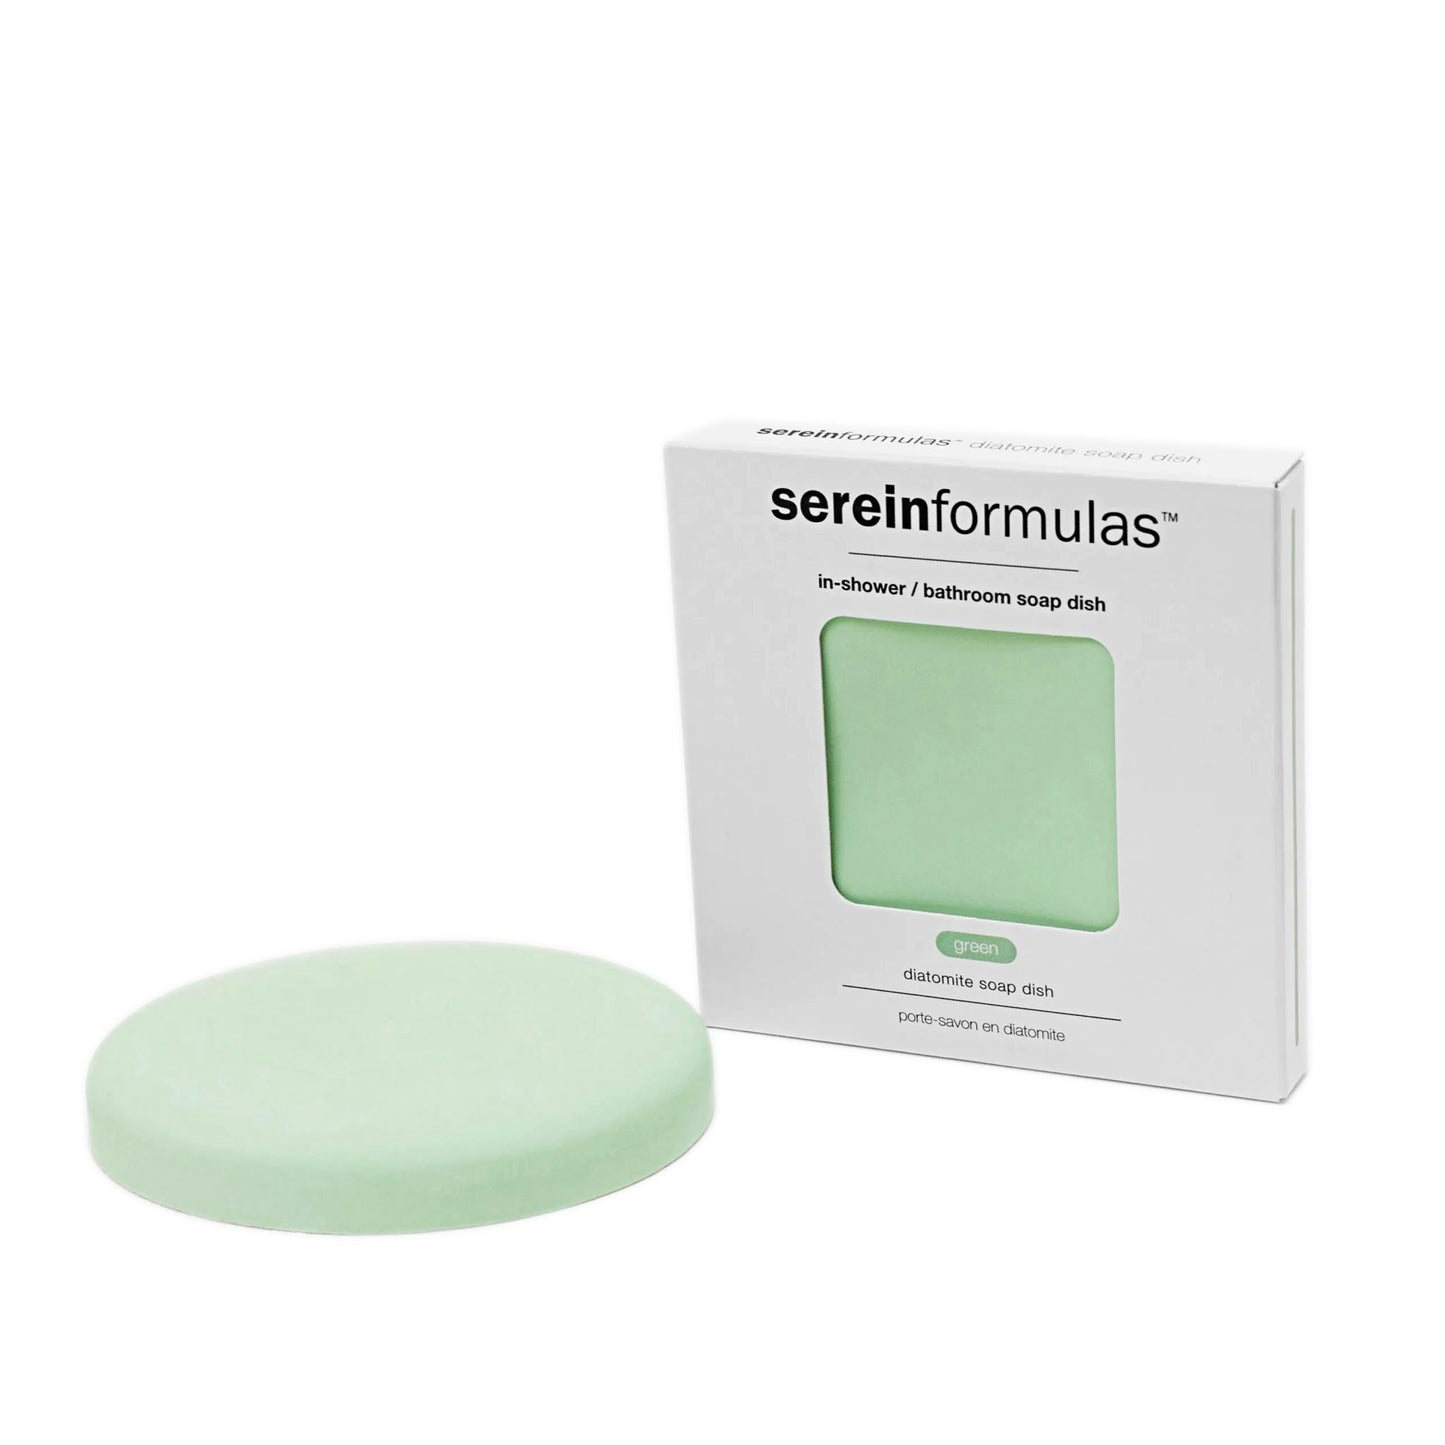 SereinFormulas Diatomite Green Soap Dish